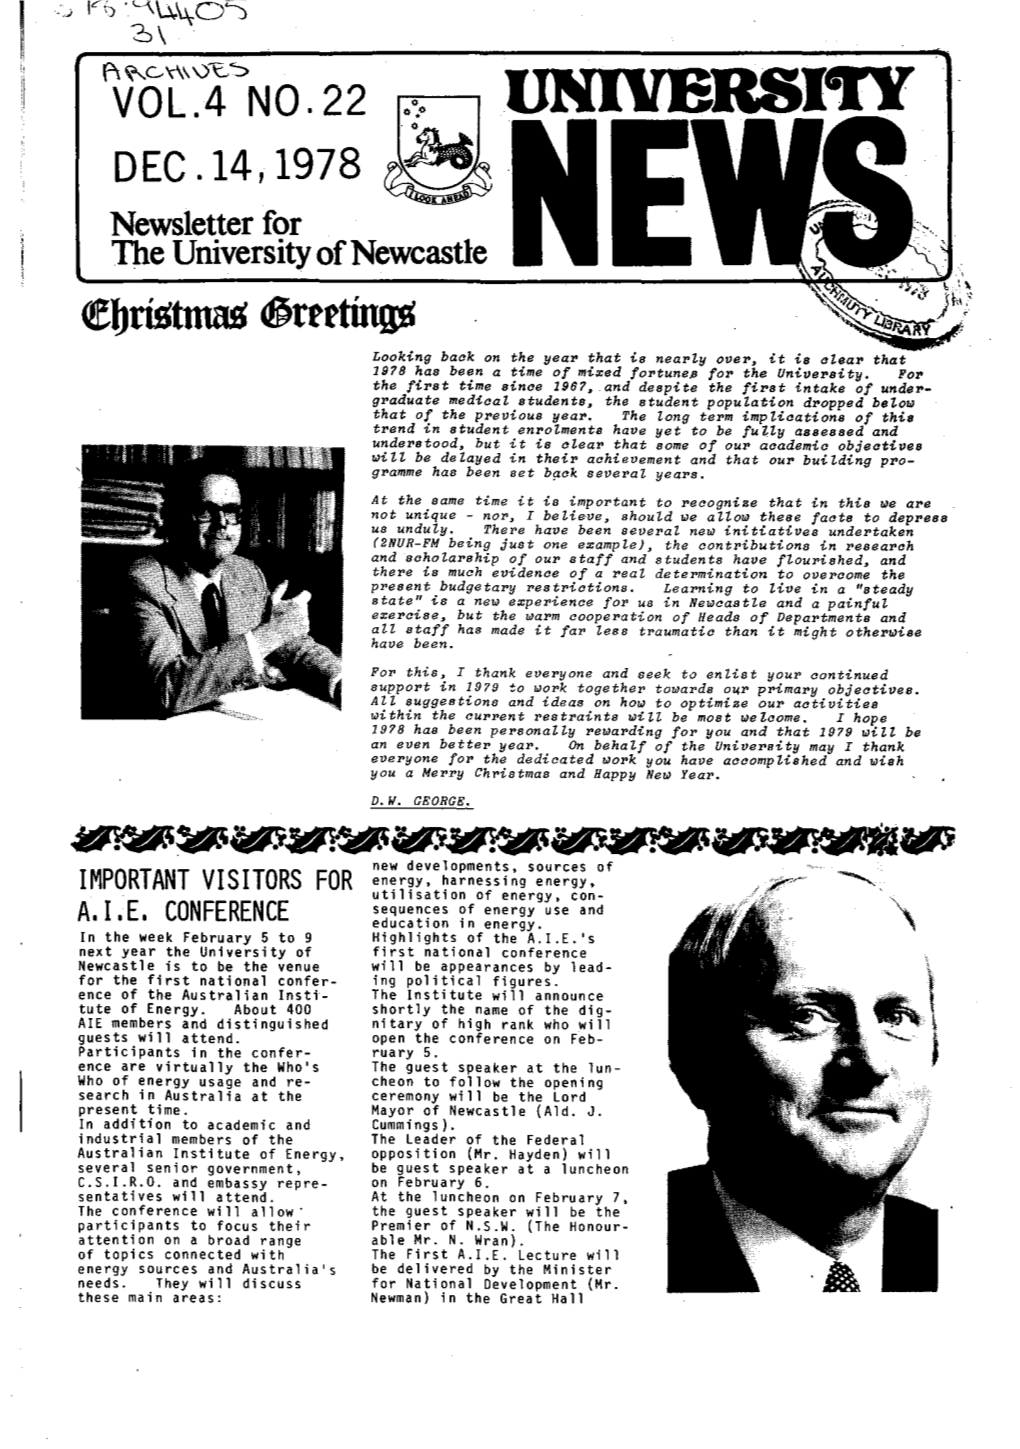 The University News, Vol. 4, No. 22, December 14, 1978